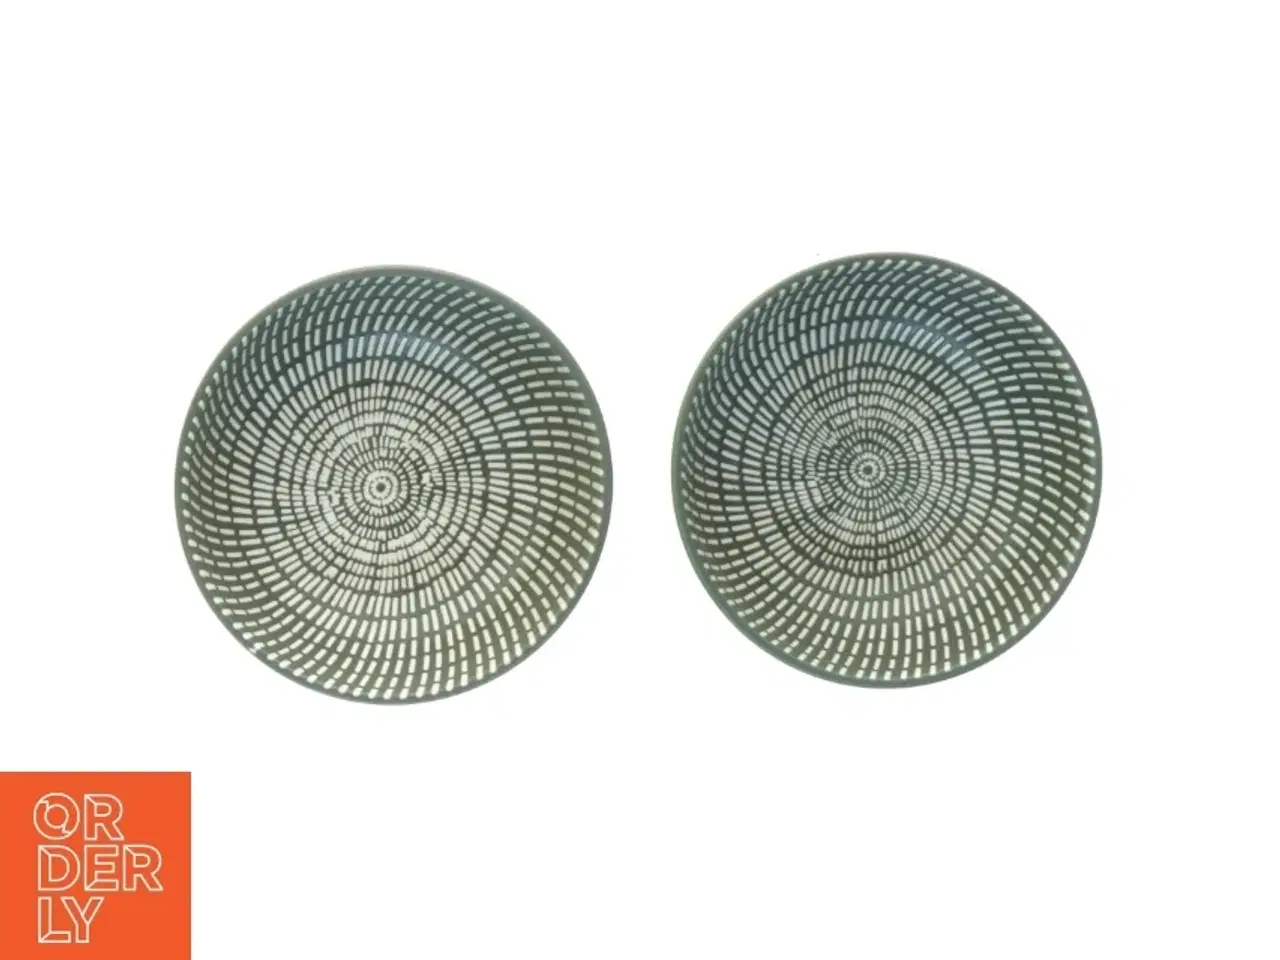 Billede 1 - Skåle med mønster fra Søstrene Grene (str. 13 x 4 cm)